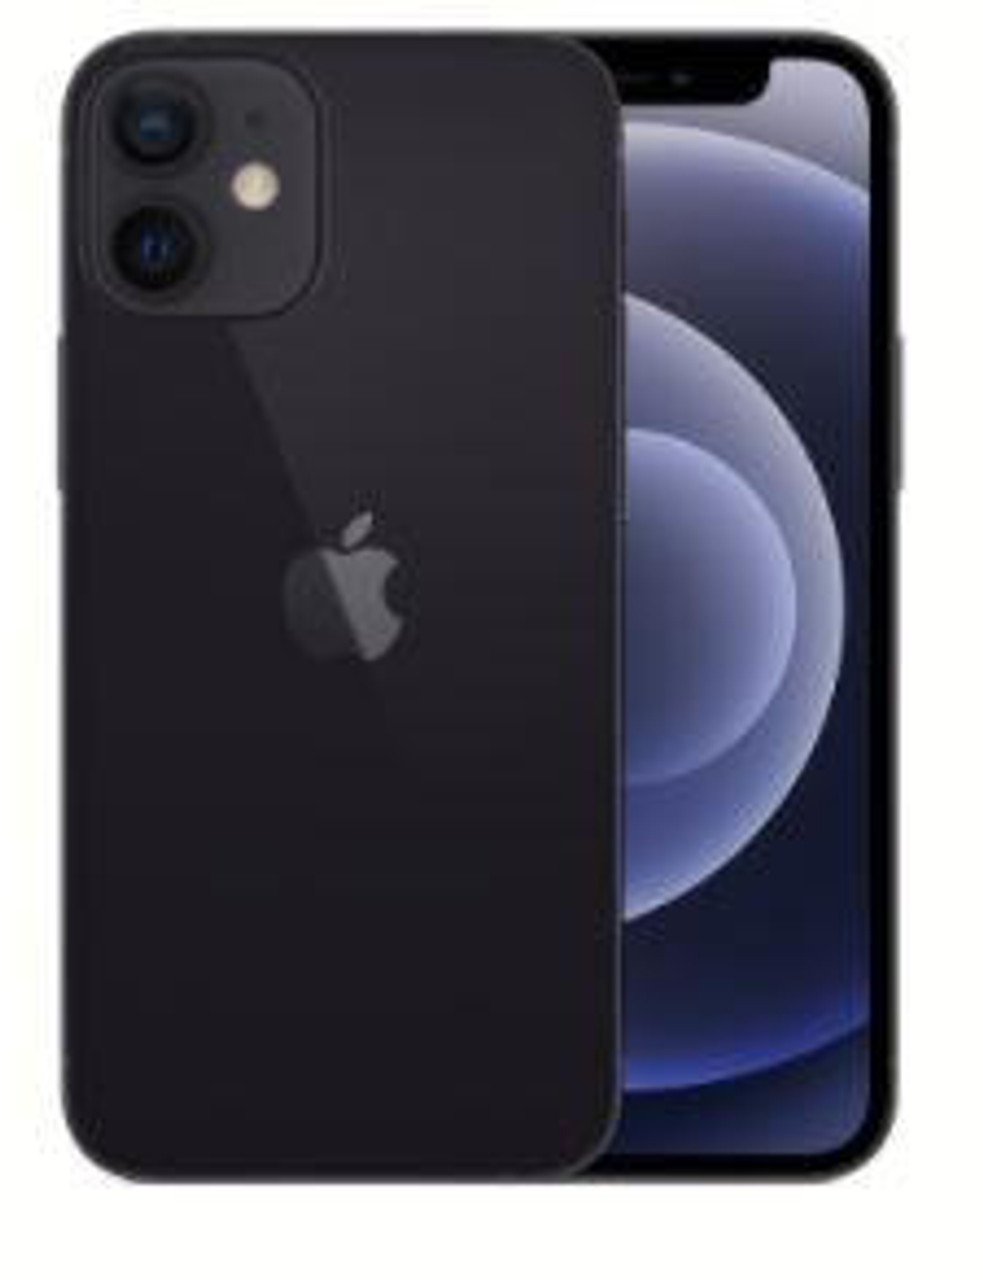 APPLE iPhone 11 - 64 GB, Black